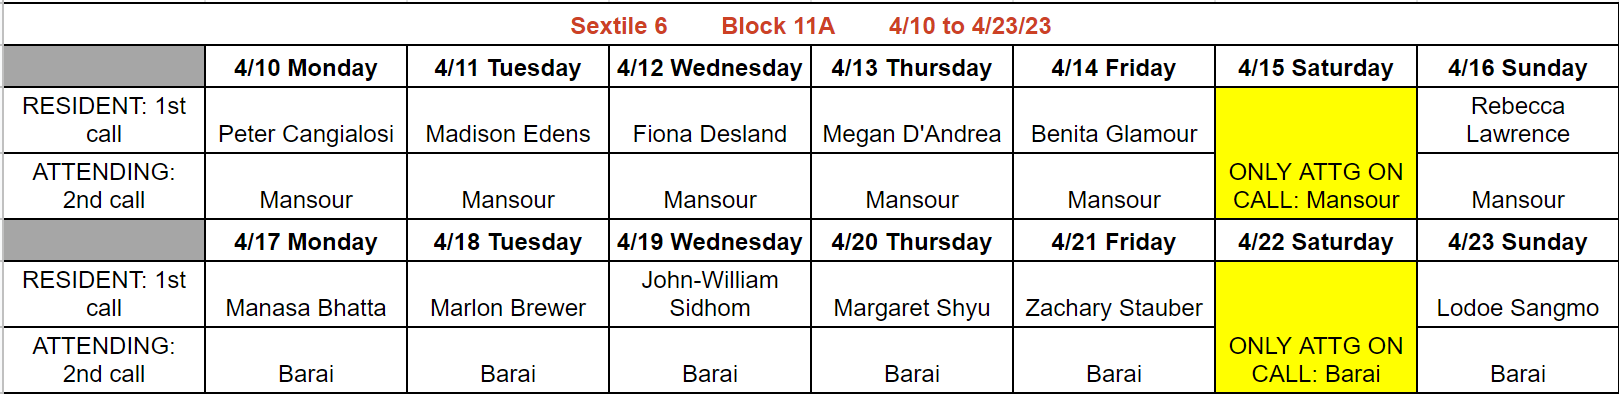 Block 11A - Apr 10-23, 2023